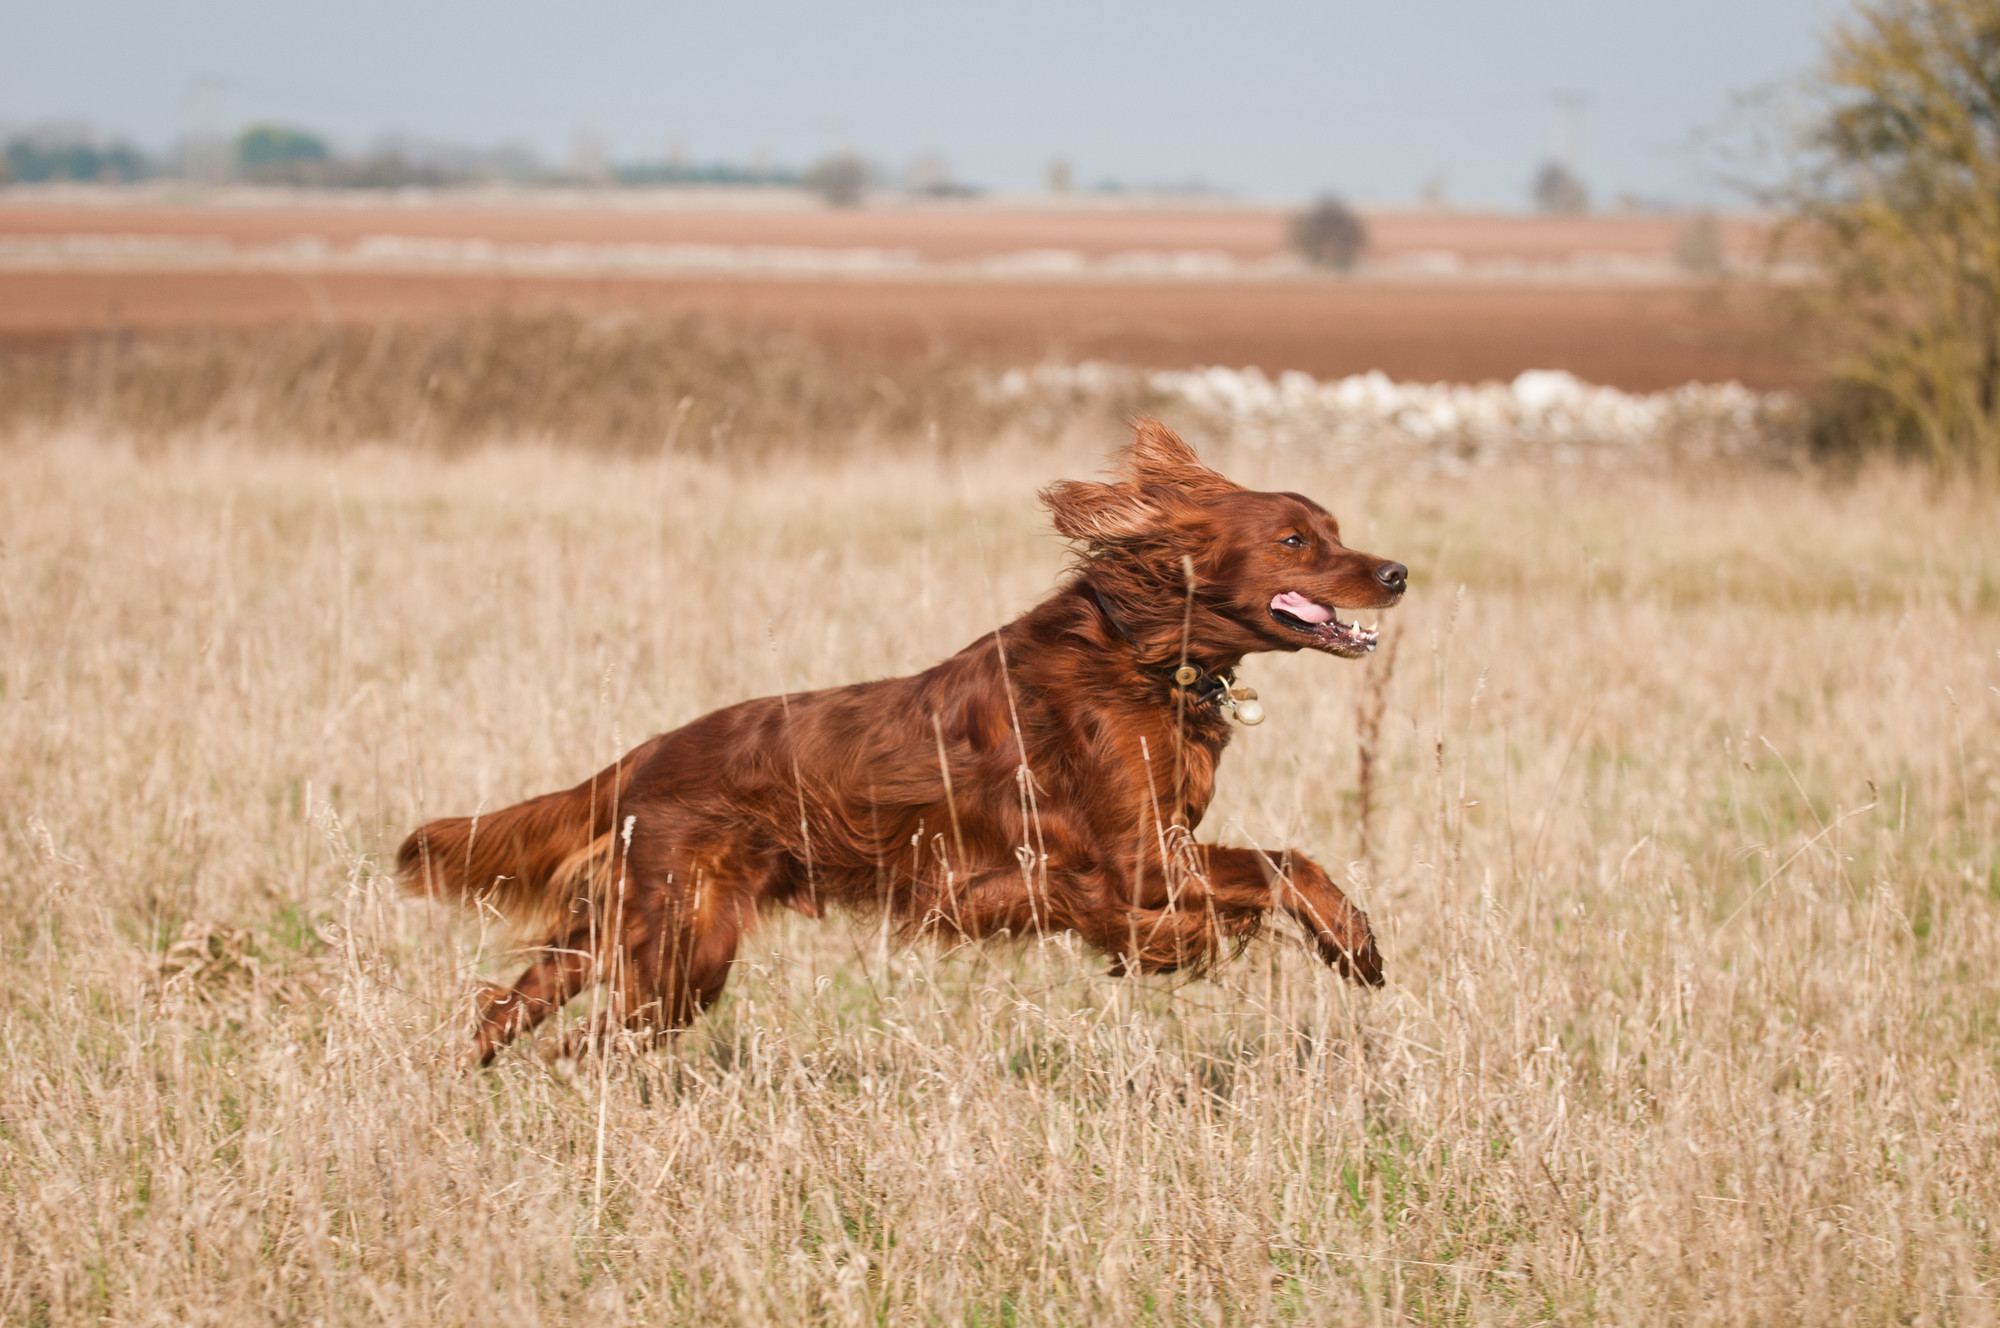 Red setter running in field